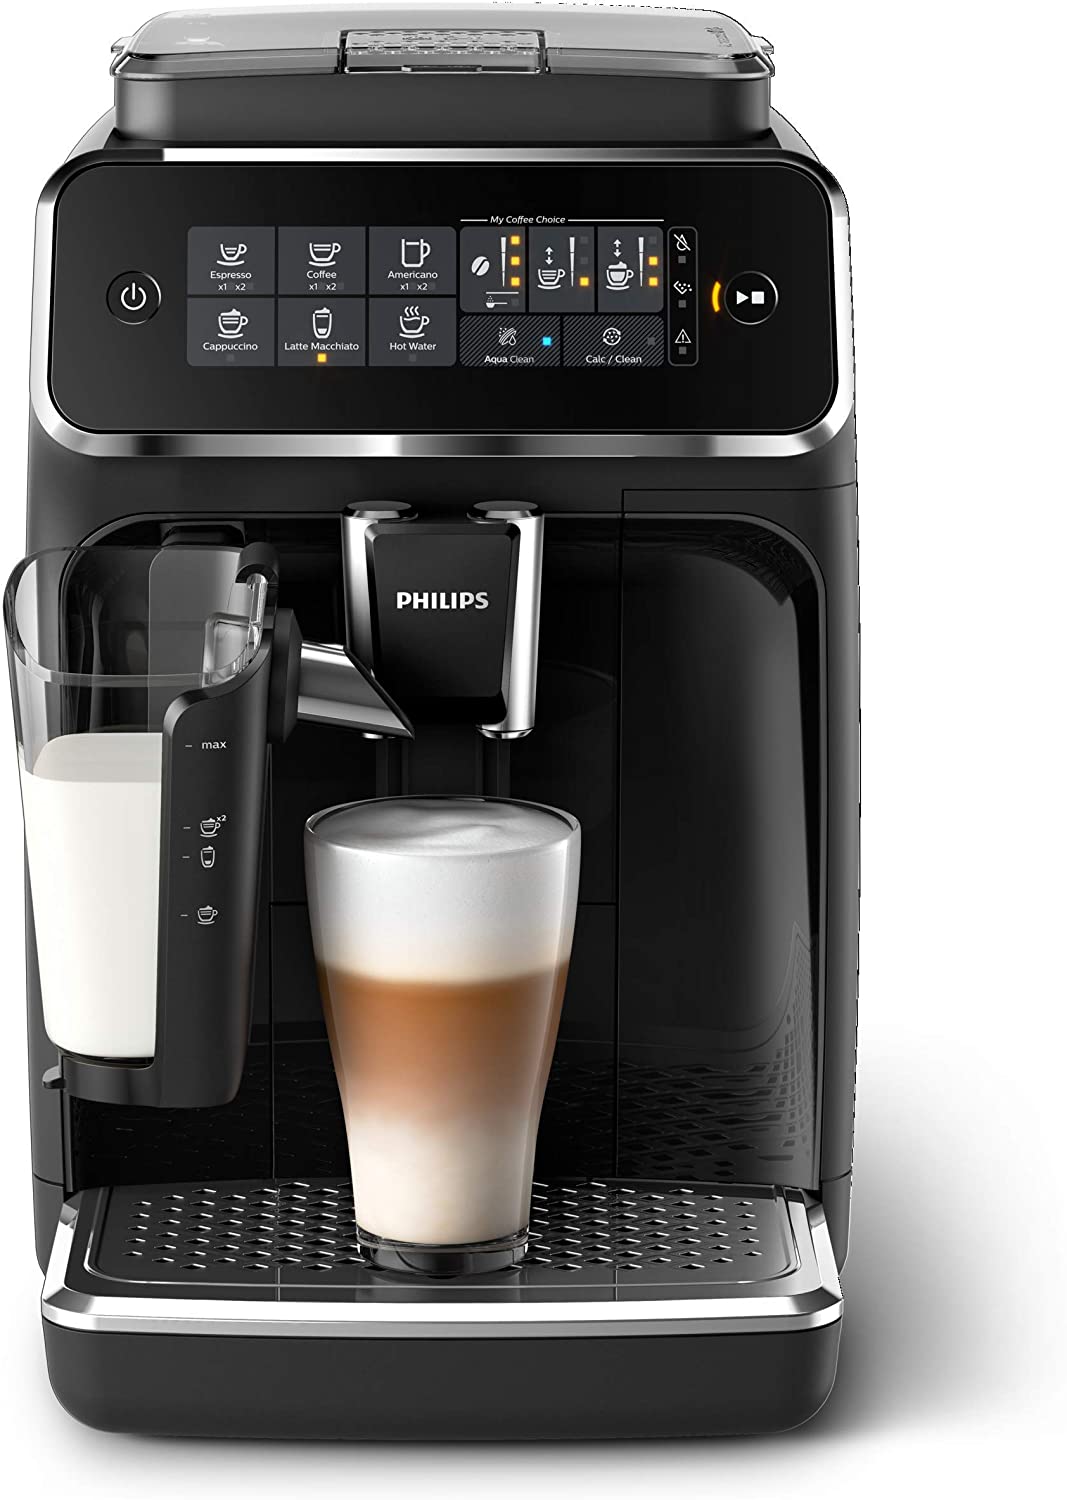 Philips-3200-Series-Fully-Automatic-Espresso-Machine-1